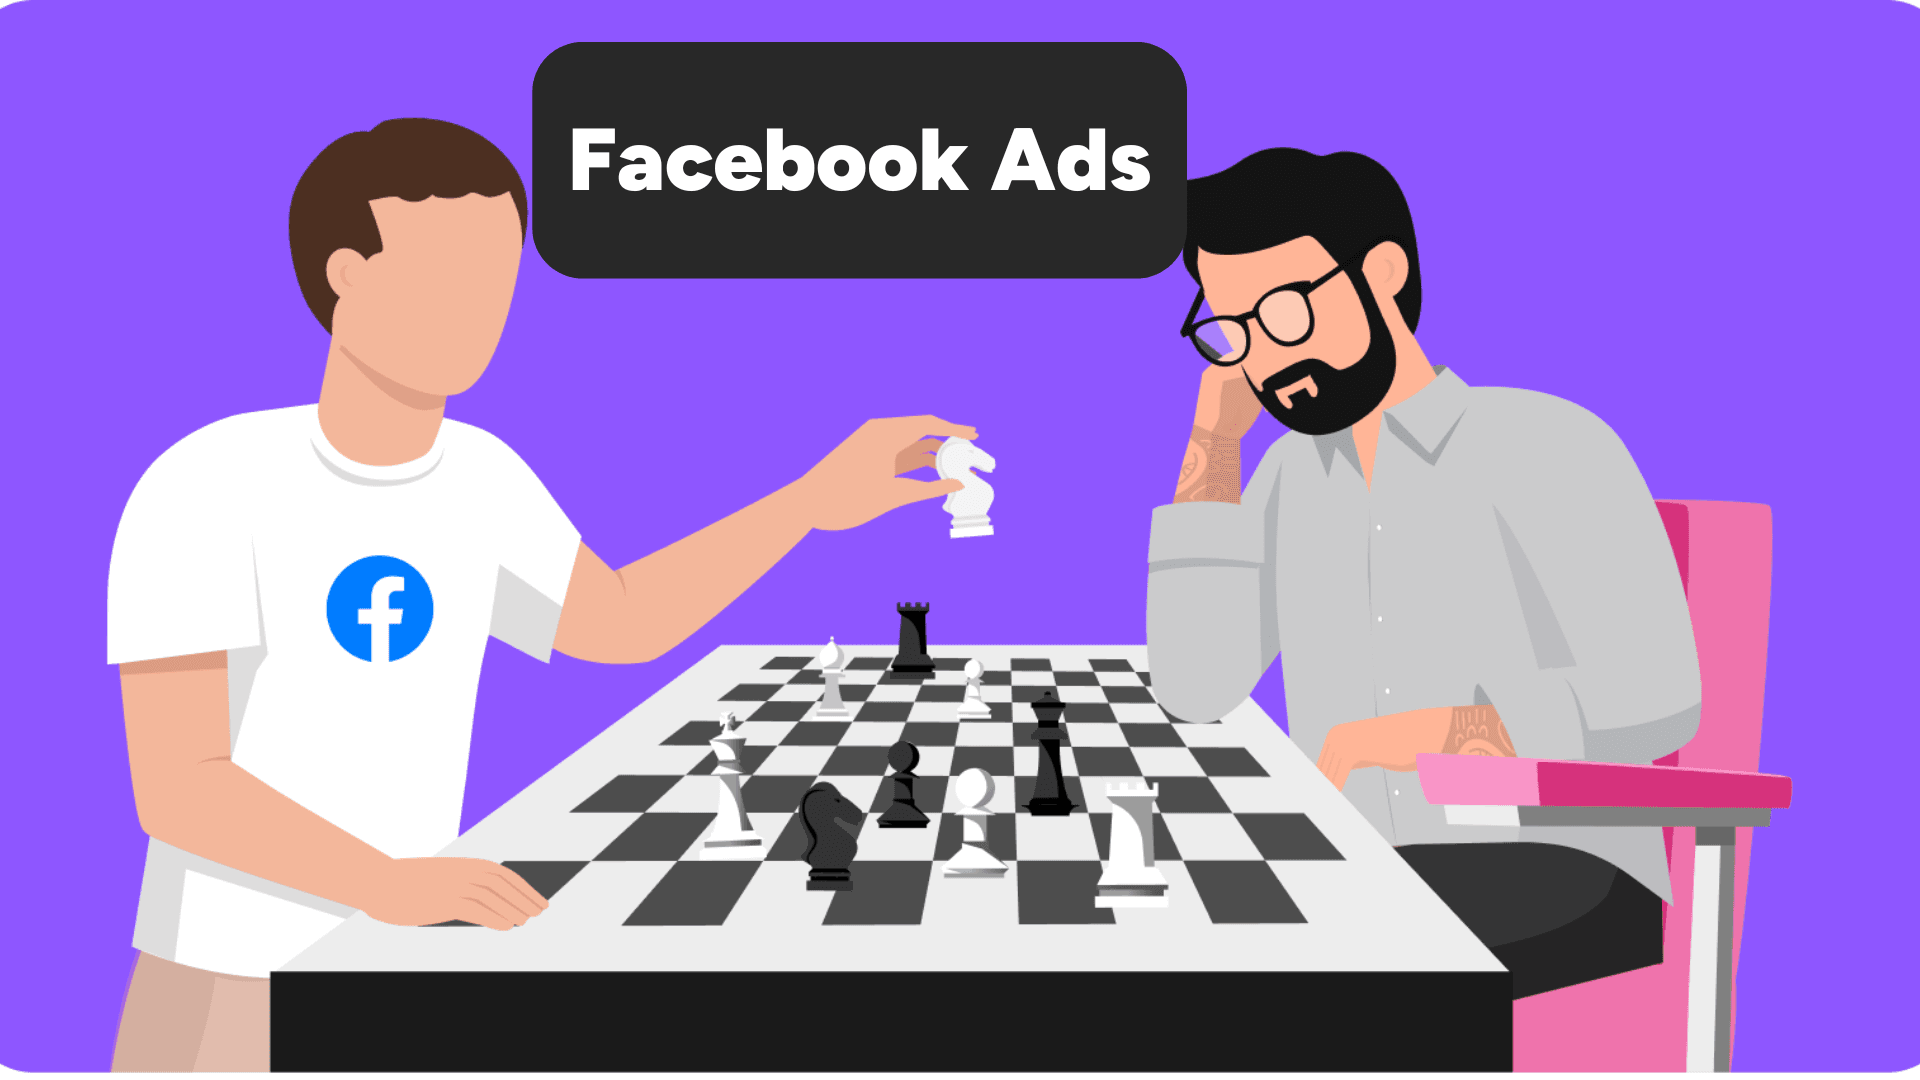 Facebook ads cover